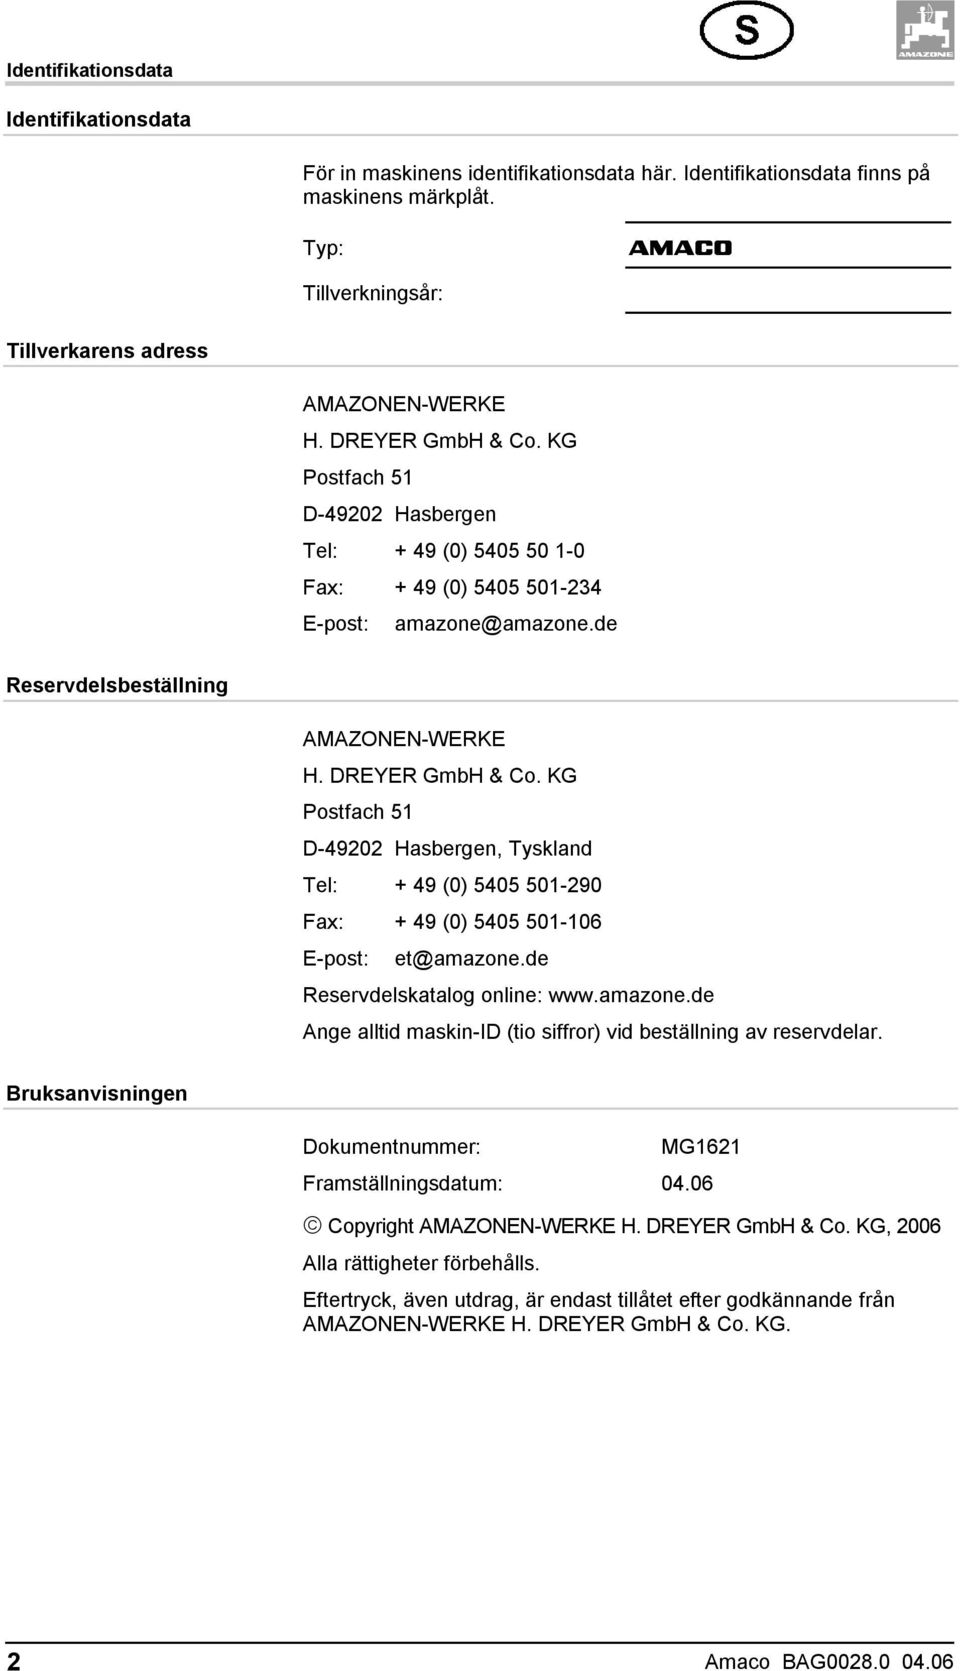 KG Postfach 51 D-49202 Hasbergen, Tyskland Tel: + 49 (0) 5405 501-290 Fax: + 49 (0) 5405 501-106 E-post: et@amazone.de Reservdelskatalog online: www.amazone.de Ange alltid maskin-id (tio siffror) vid beställning av reservdelar.